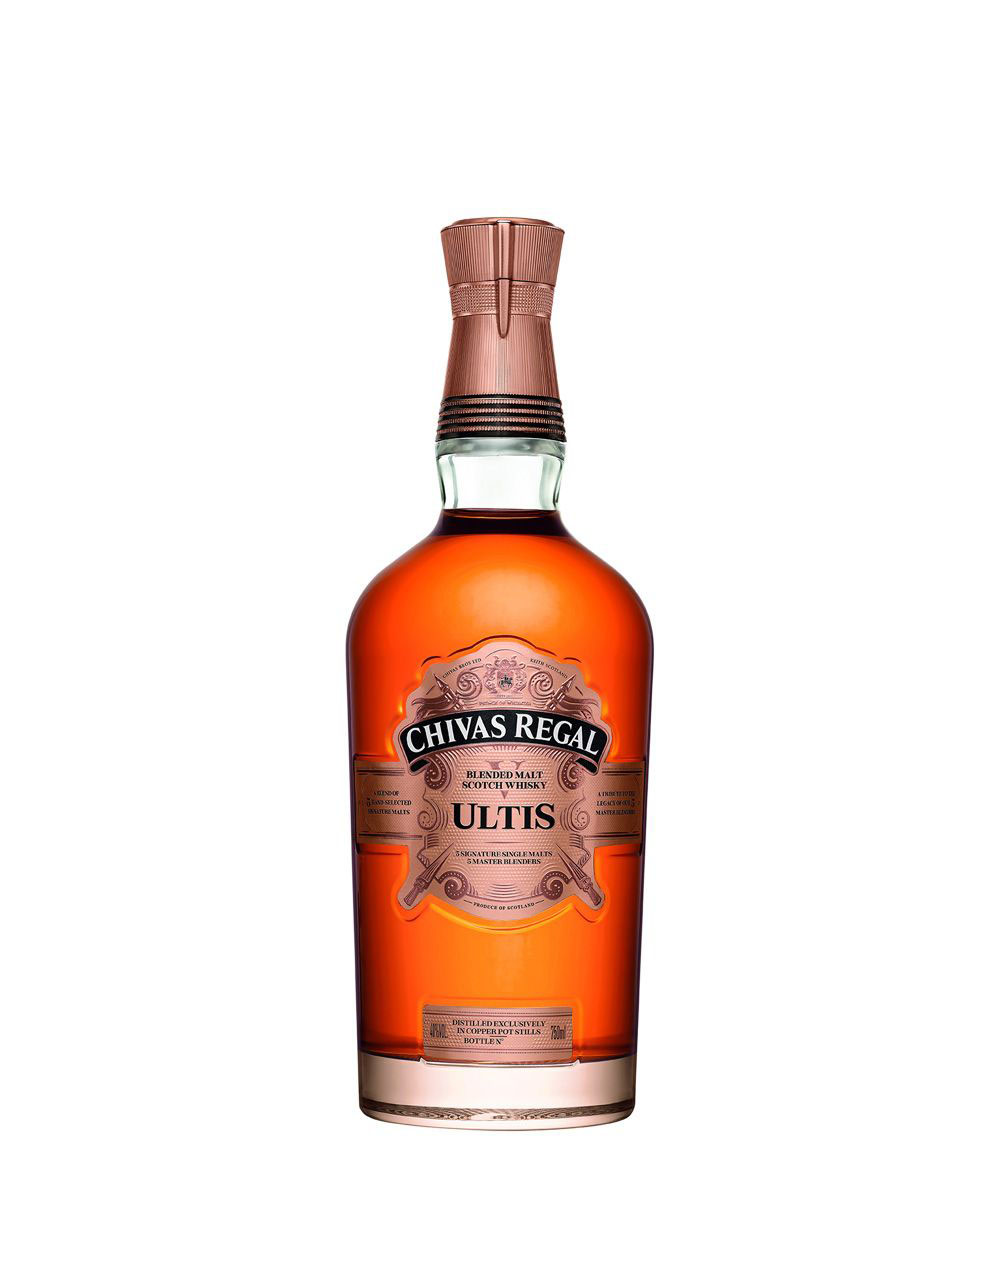 Benchmark Old No. 8 Kentucky Straight Bourbon Whiskey